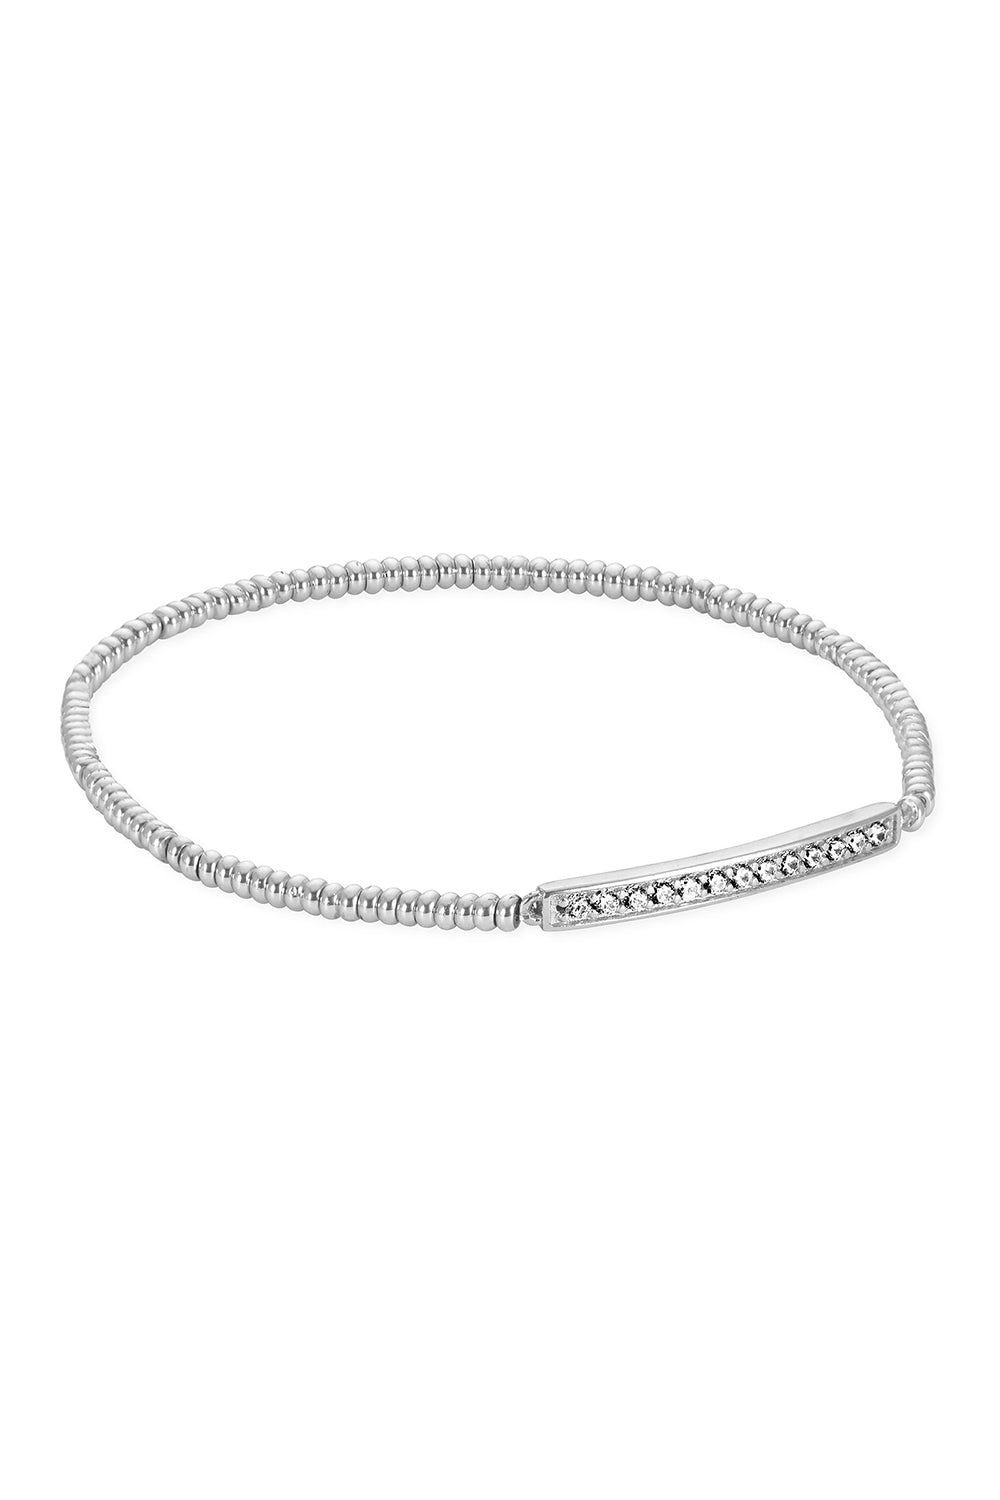 Kendra Scott: Addison Stretch Bracelet - Silver | Makk Fashions